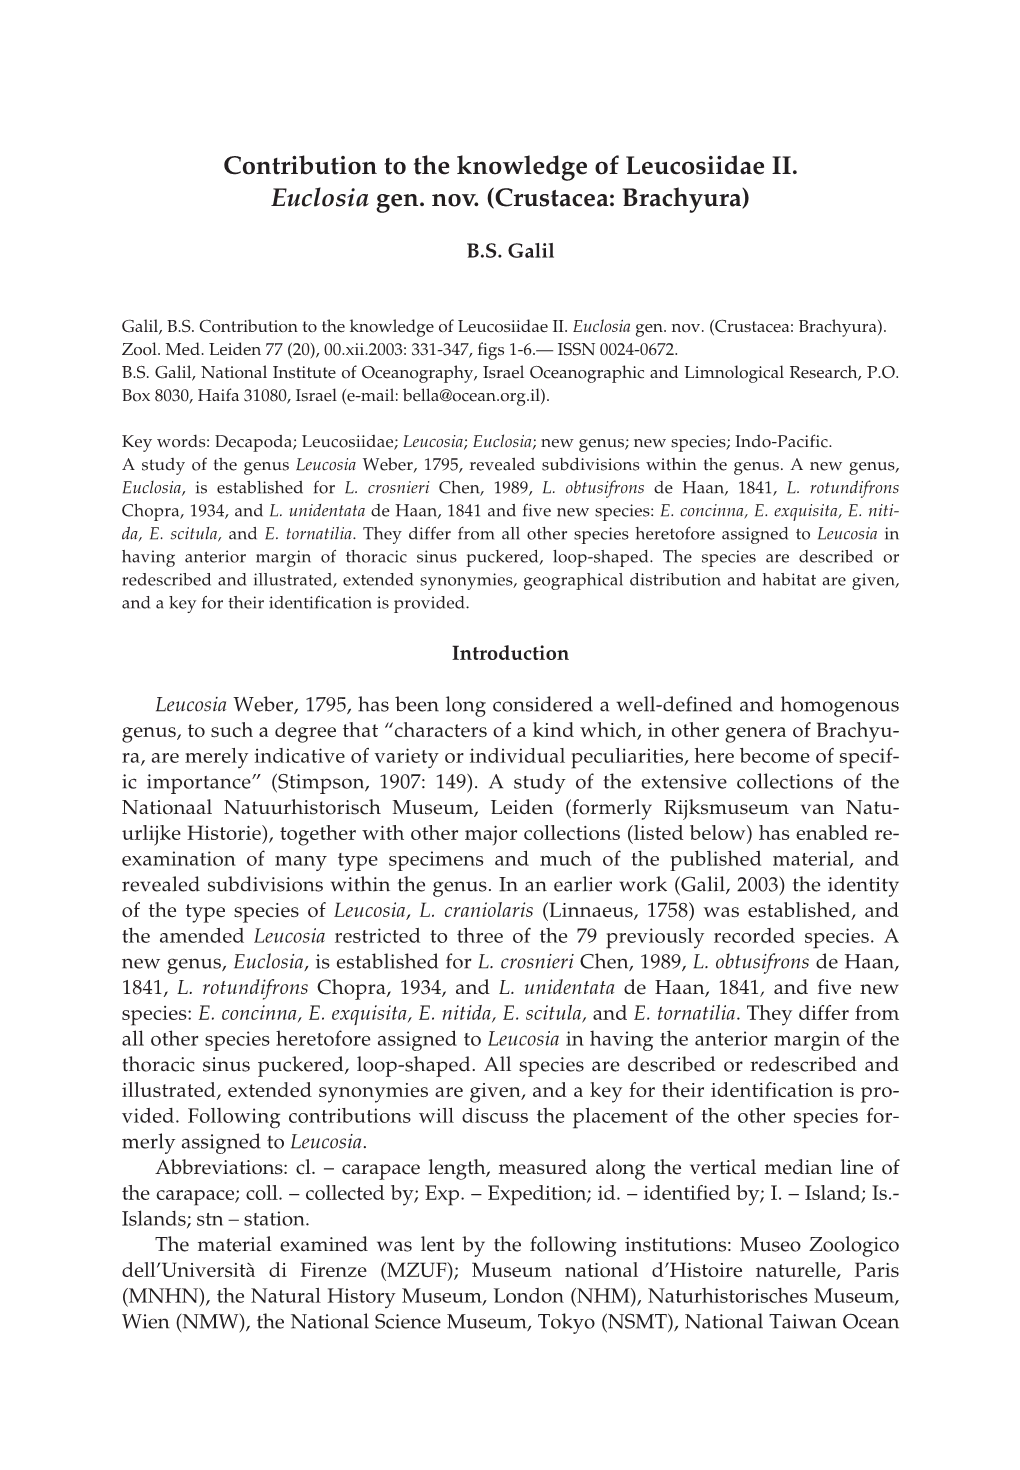 Contribution to the Knowledge of Leucosiidae II. Euclosia Gen. Nov. (Crustacea: Brachyura)